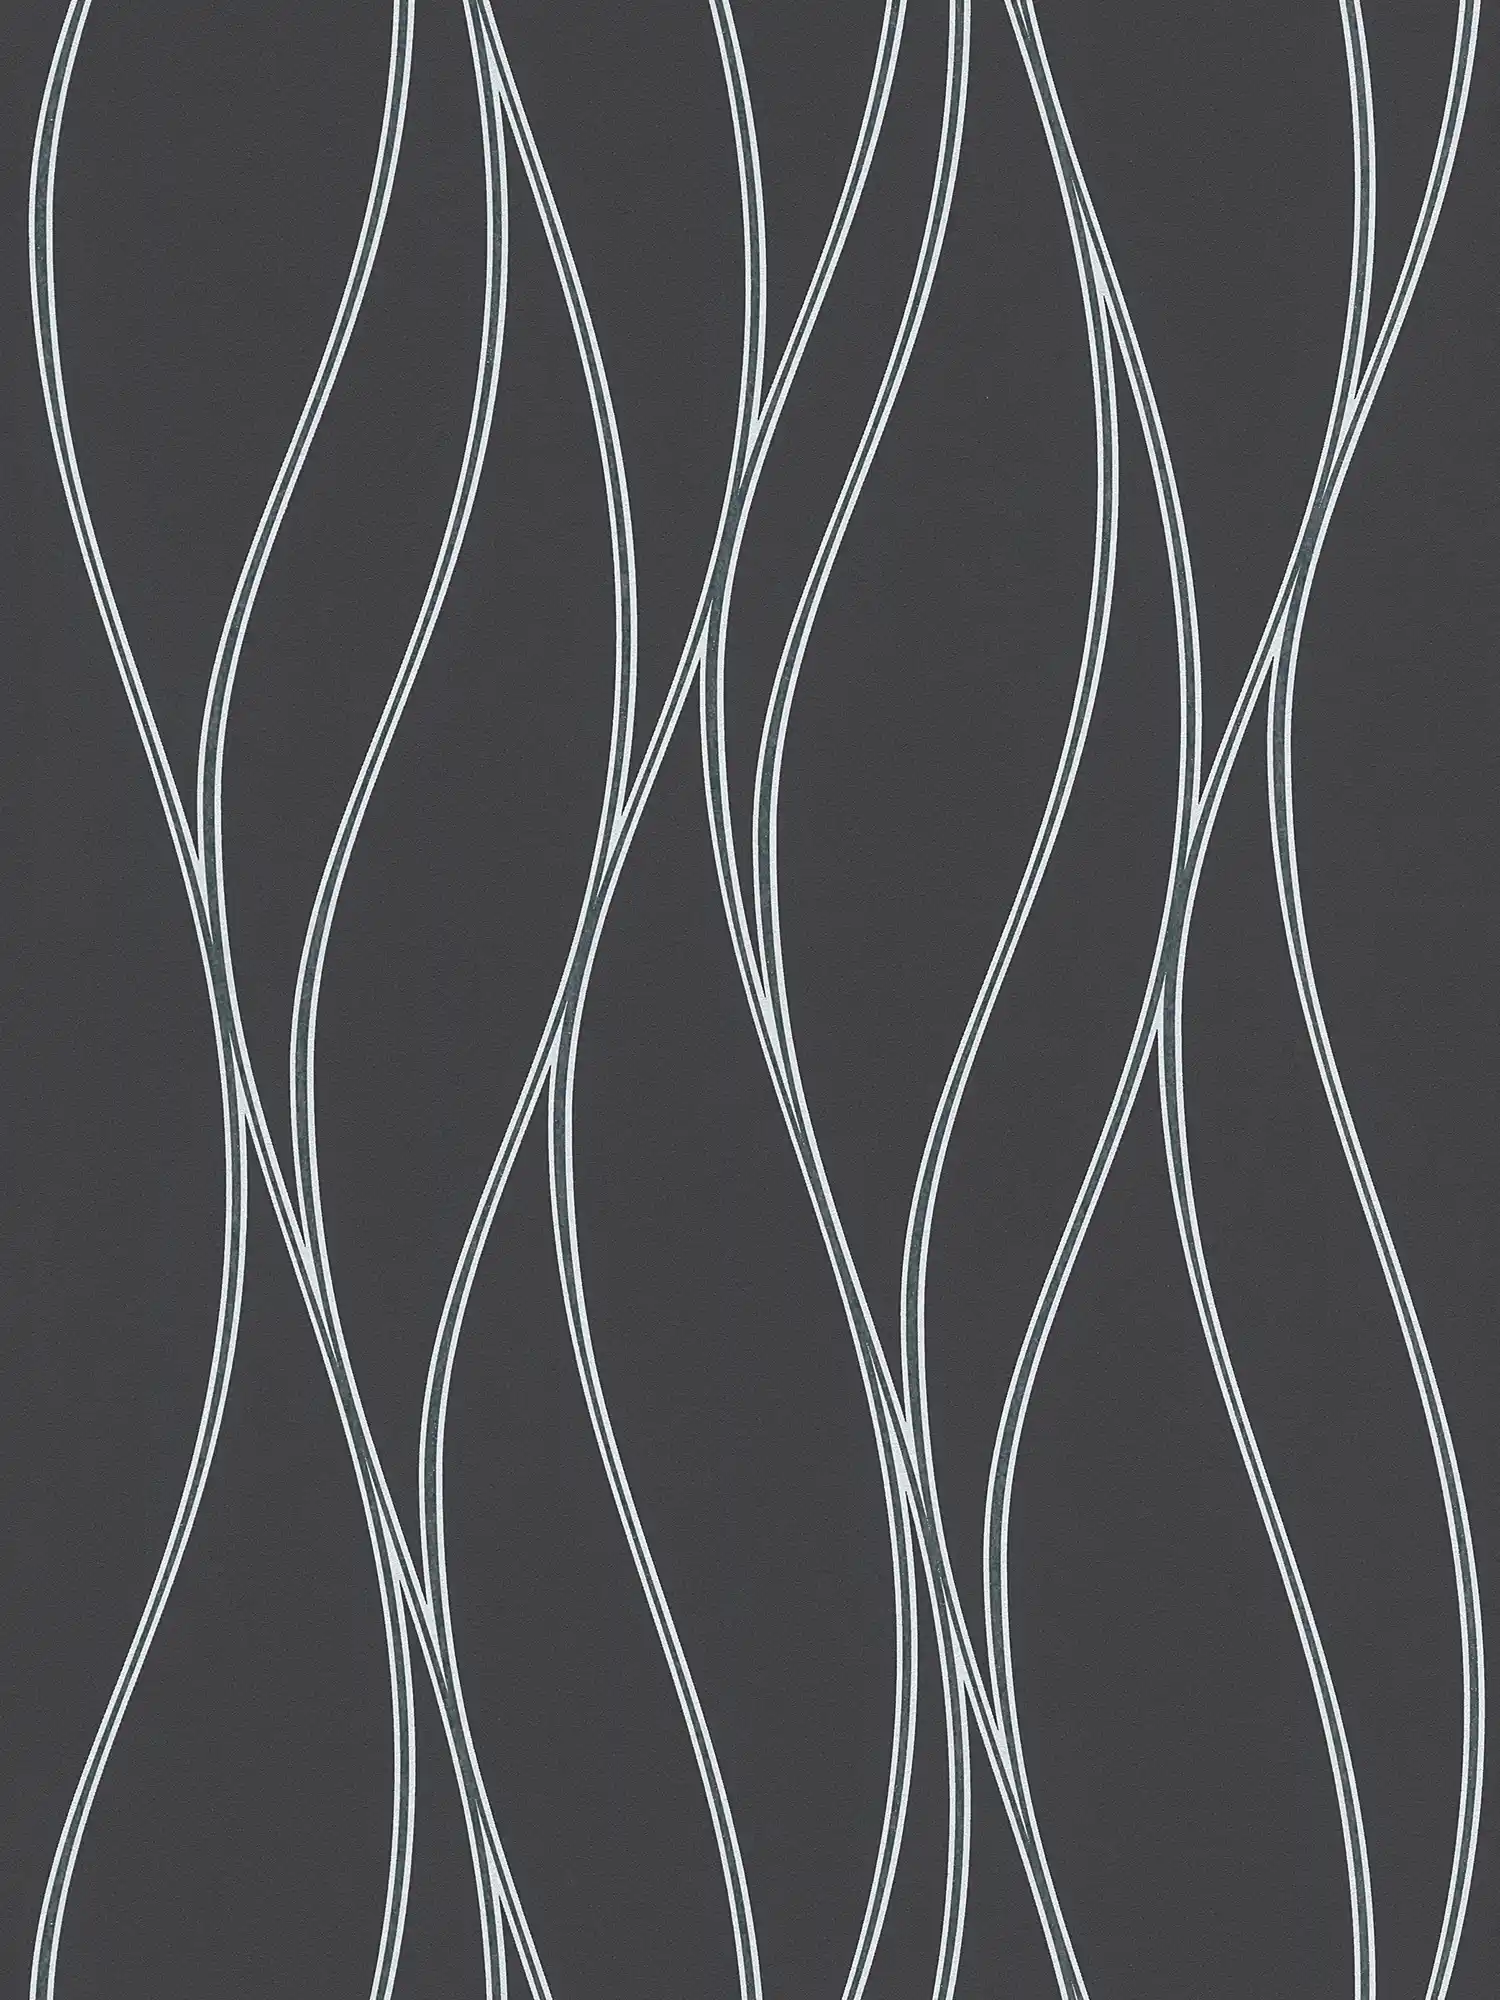 Tapete Wellen-Linien vertikal, Metallic-Effekt – Schwarz, Silber, Grau
